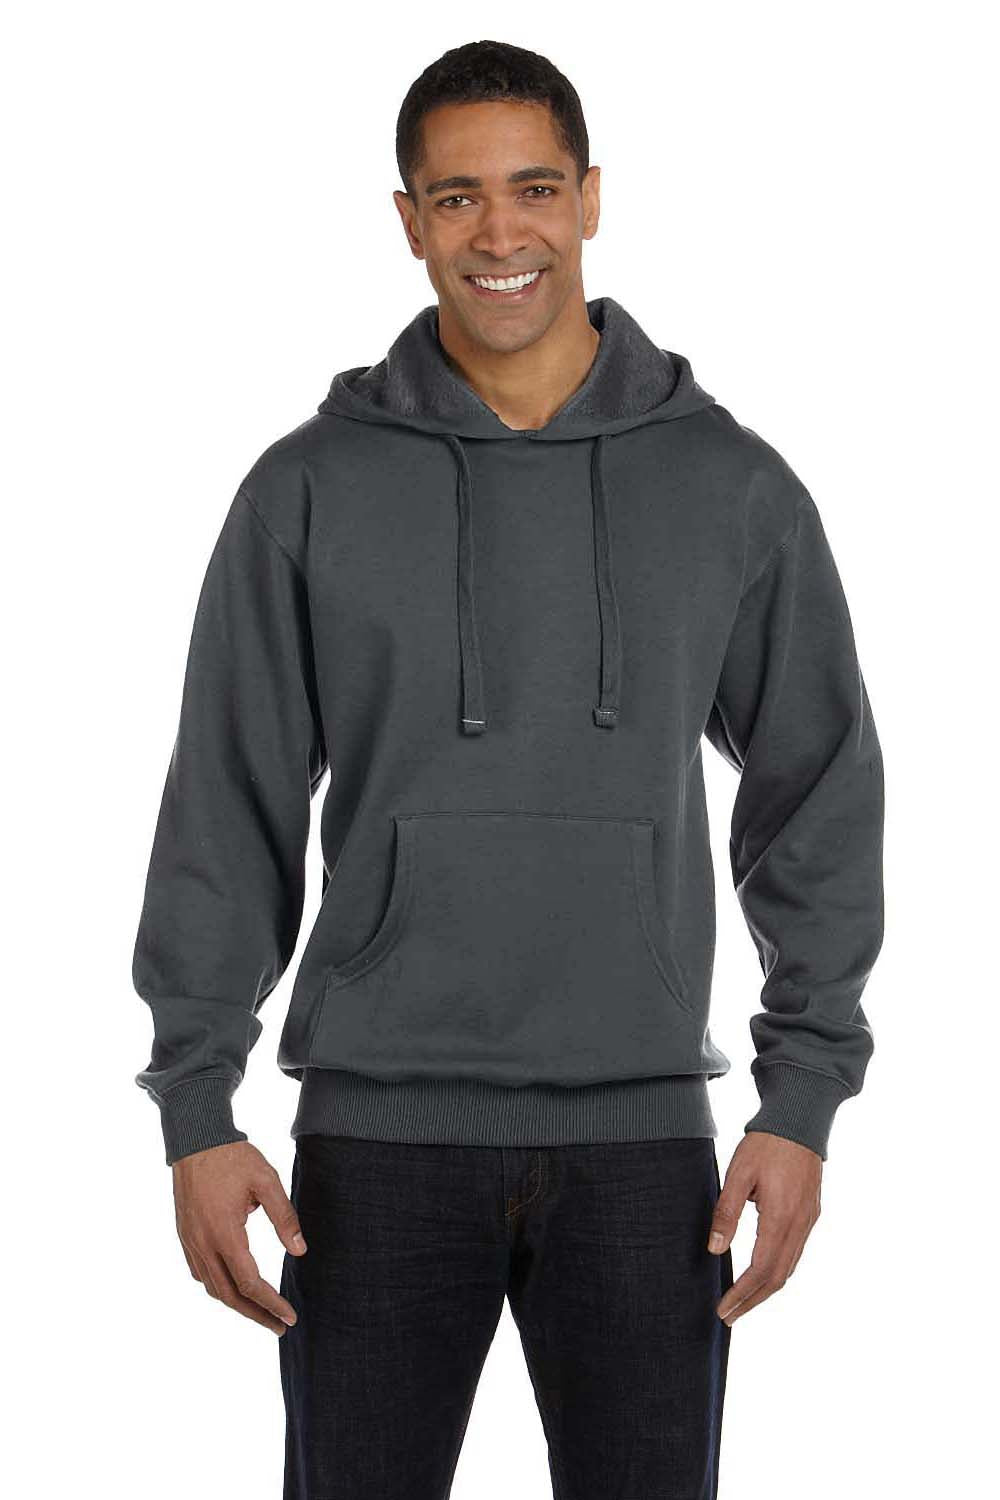 Econscious EC5500 Mens Hooded Sweatshirt Hoodie Charcoal Grey Front